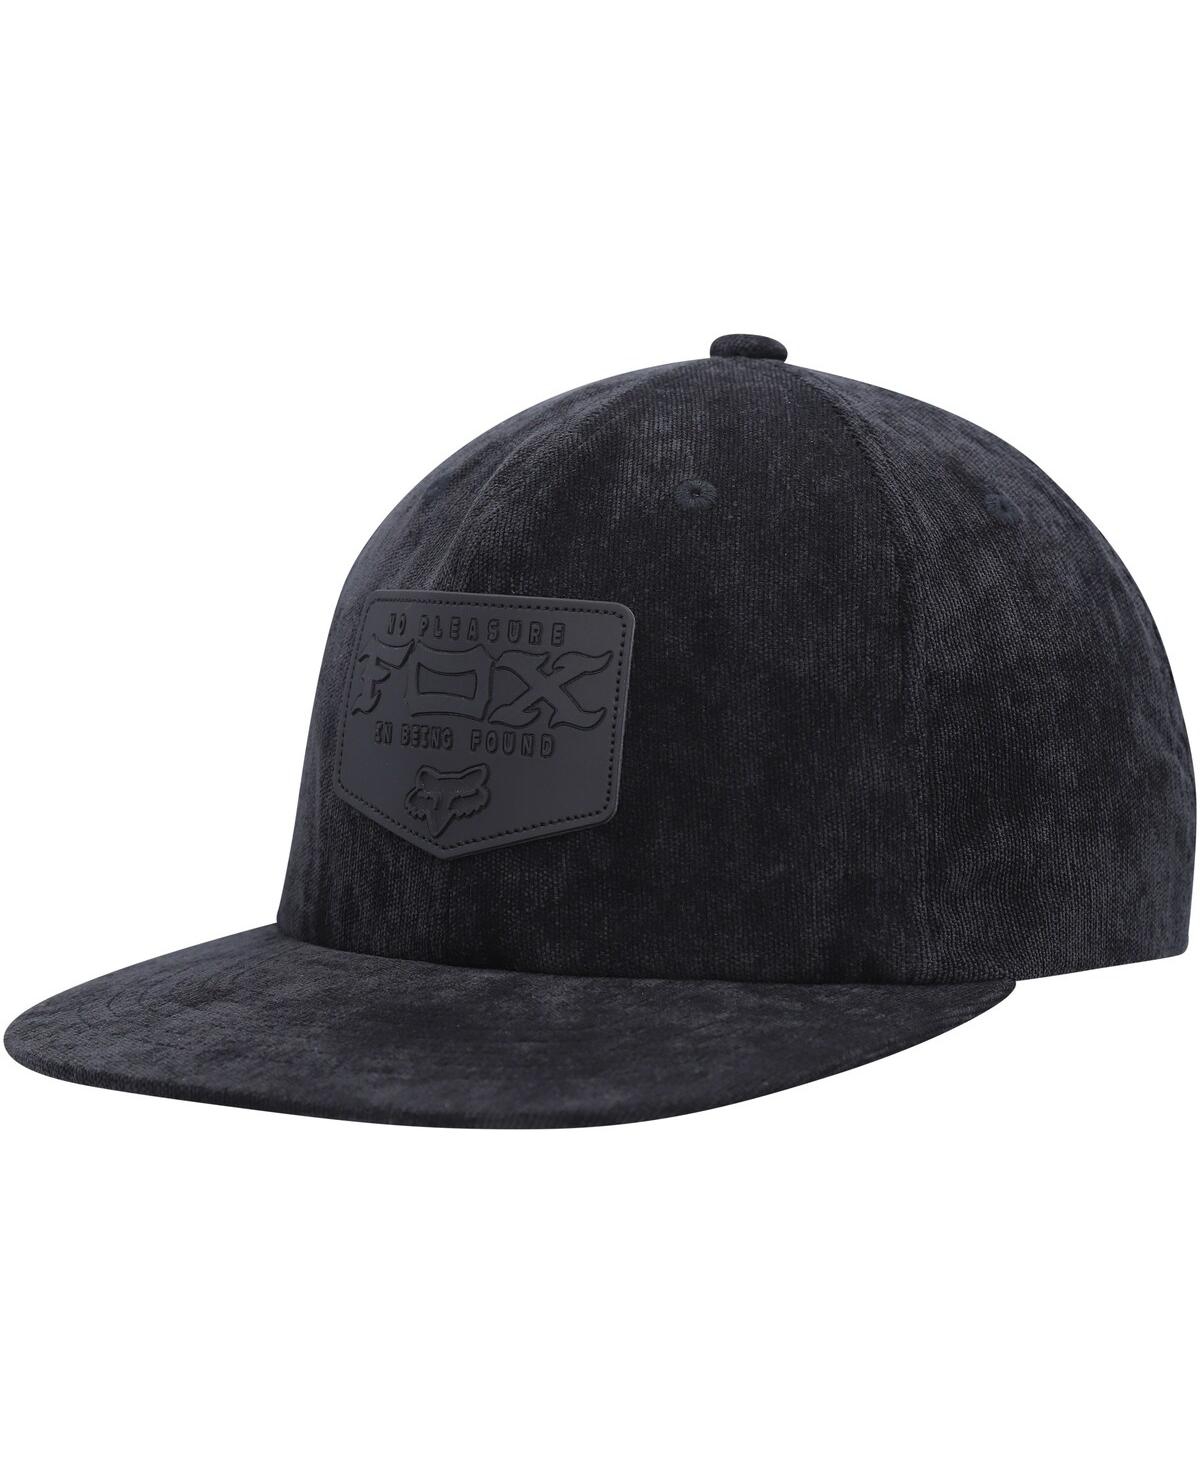 Men's Fox Black Fixated Snapback Hat - Black